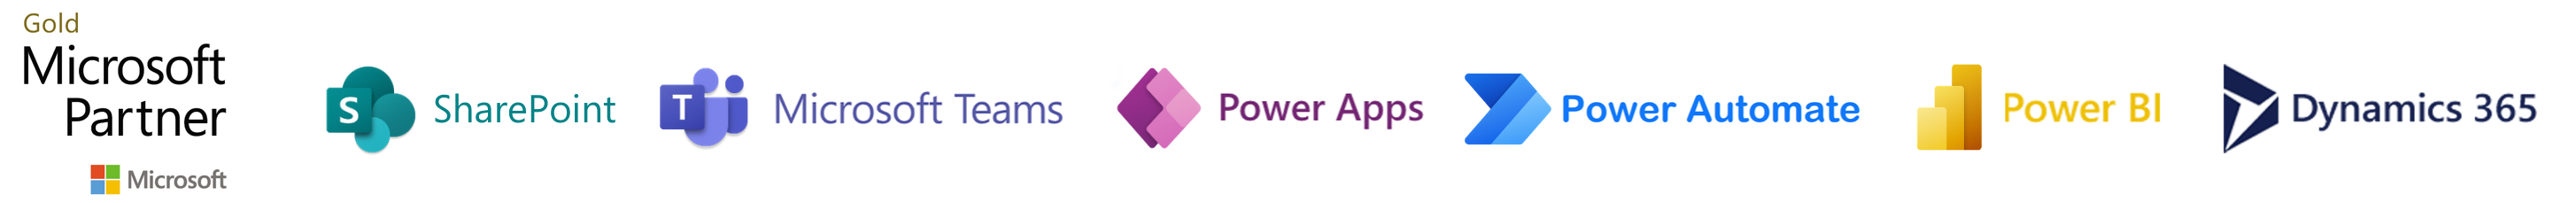 Microsoft Partner logo, SharePoint logo, Microsoft Teams logo, PowerApps logo, Flow logo, Power BI logo, Dynamics 365 logo